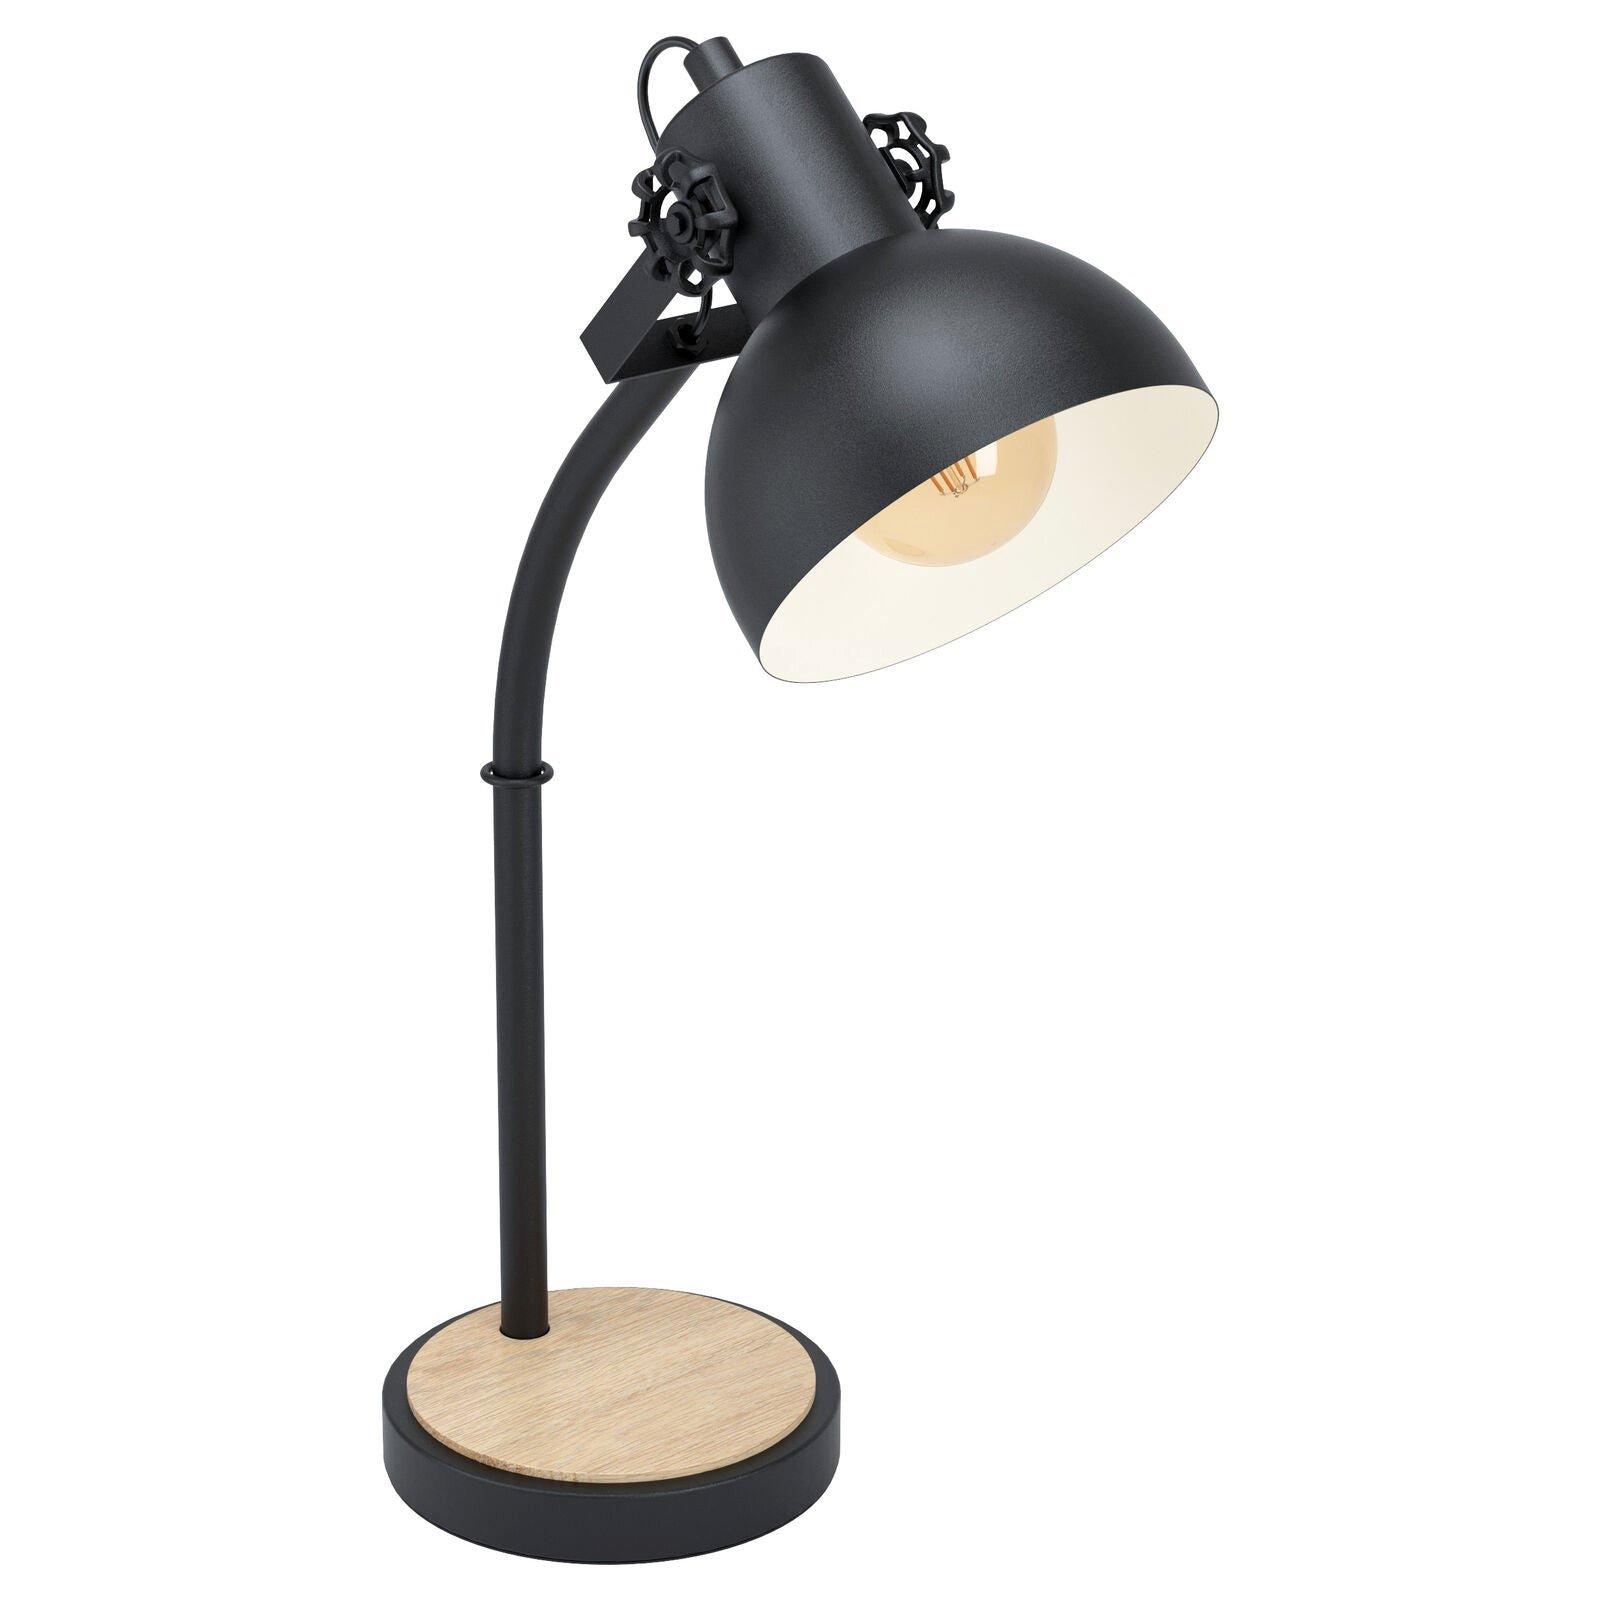 Curved Table Lamp Desk Light Black Steel Shade & Wood Base 1 x 28W E27 Bulb